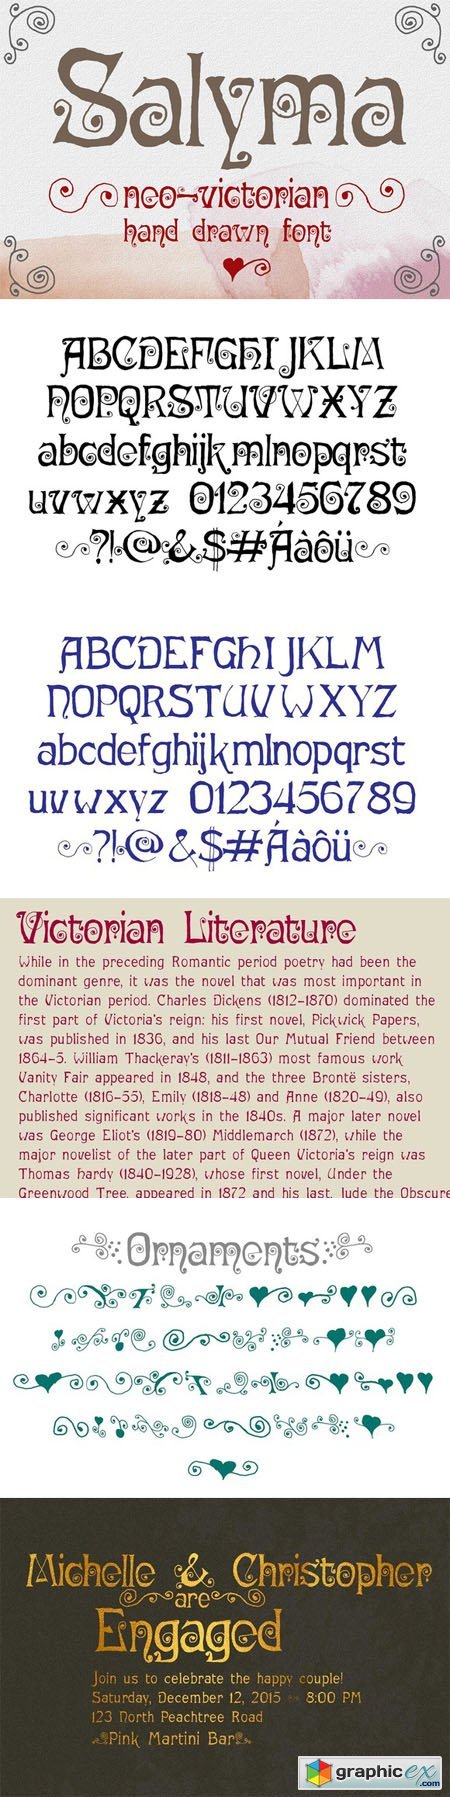 Salyma neo-victorian hand drawn font